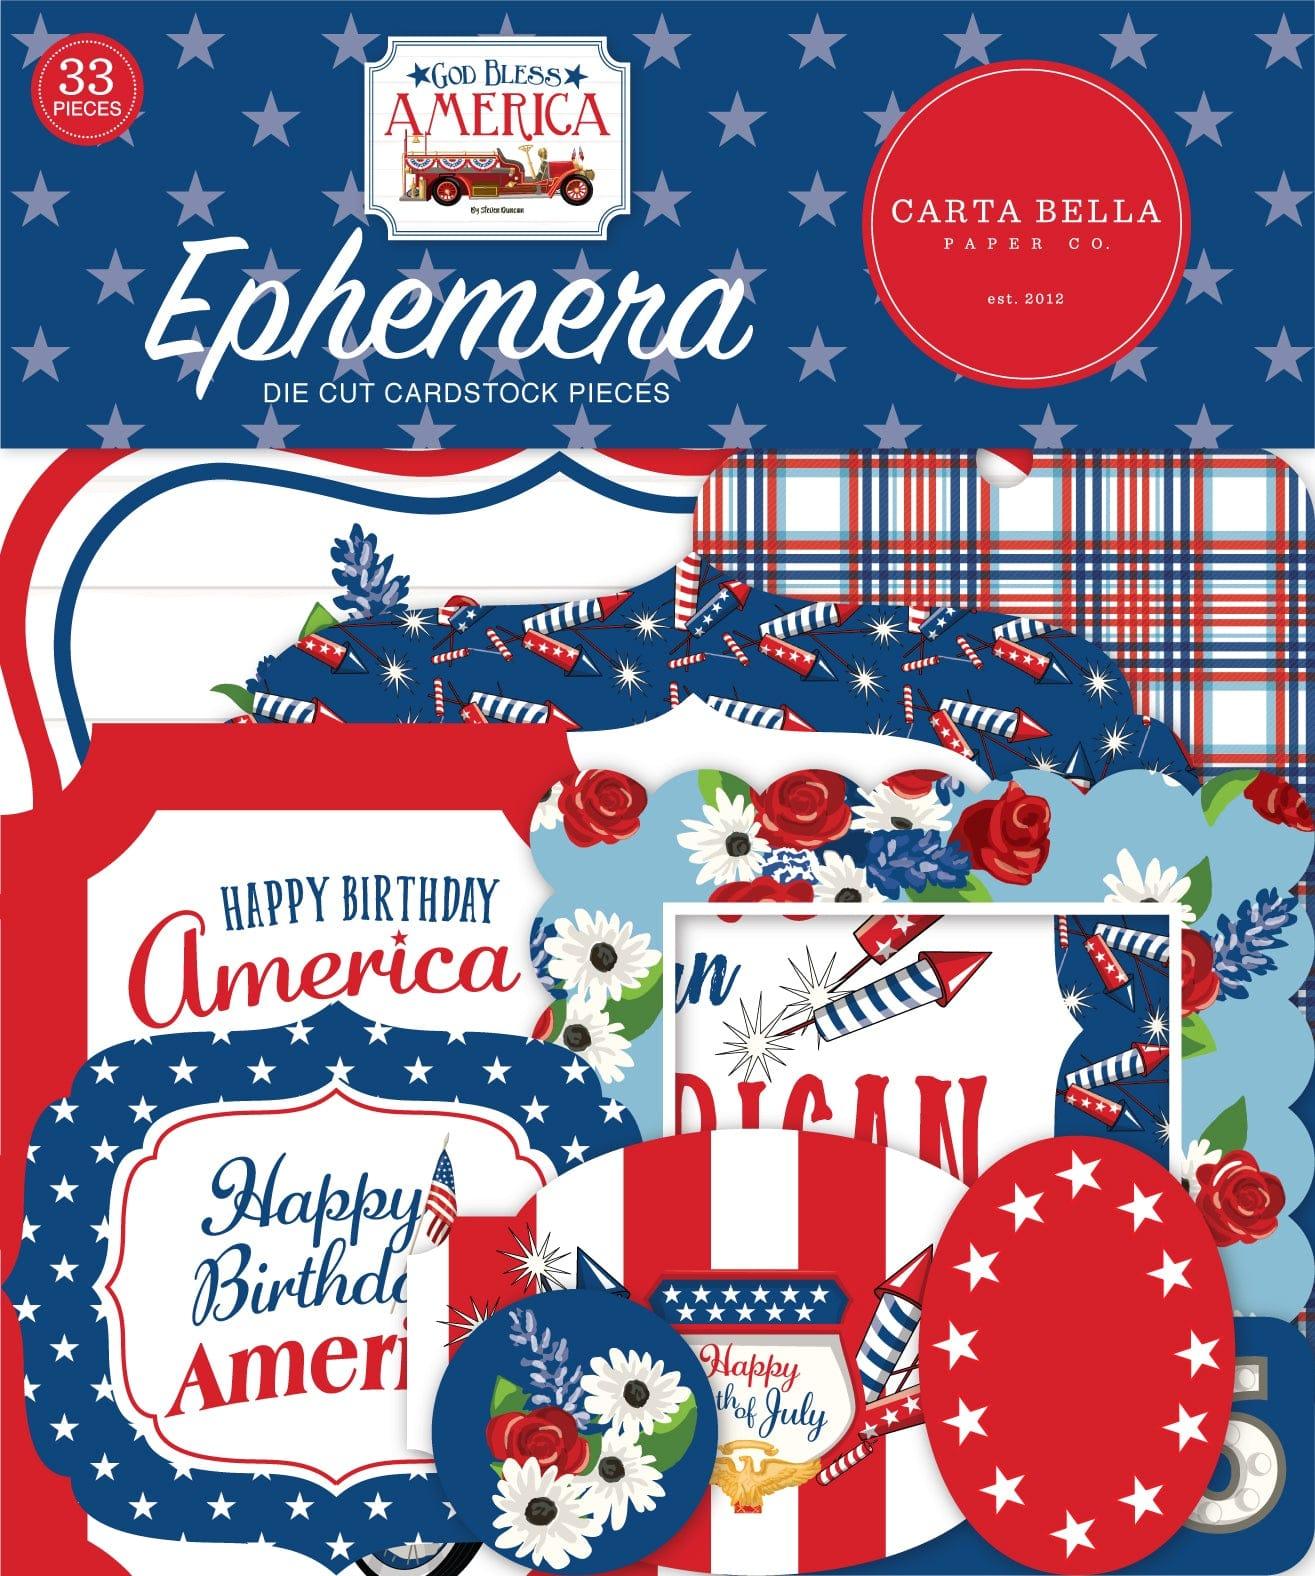 God Bless America Collection 5 x 5 Scrapbook Ephemera Die Cuts by Carta Bella - Scrapbook Supply Companies